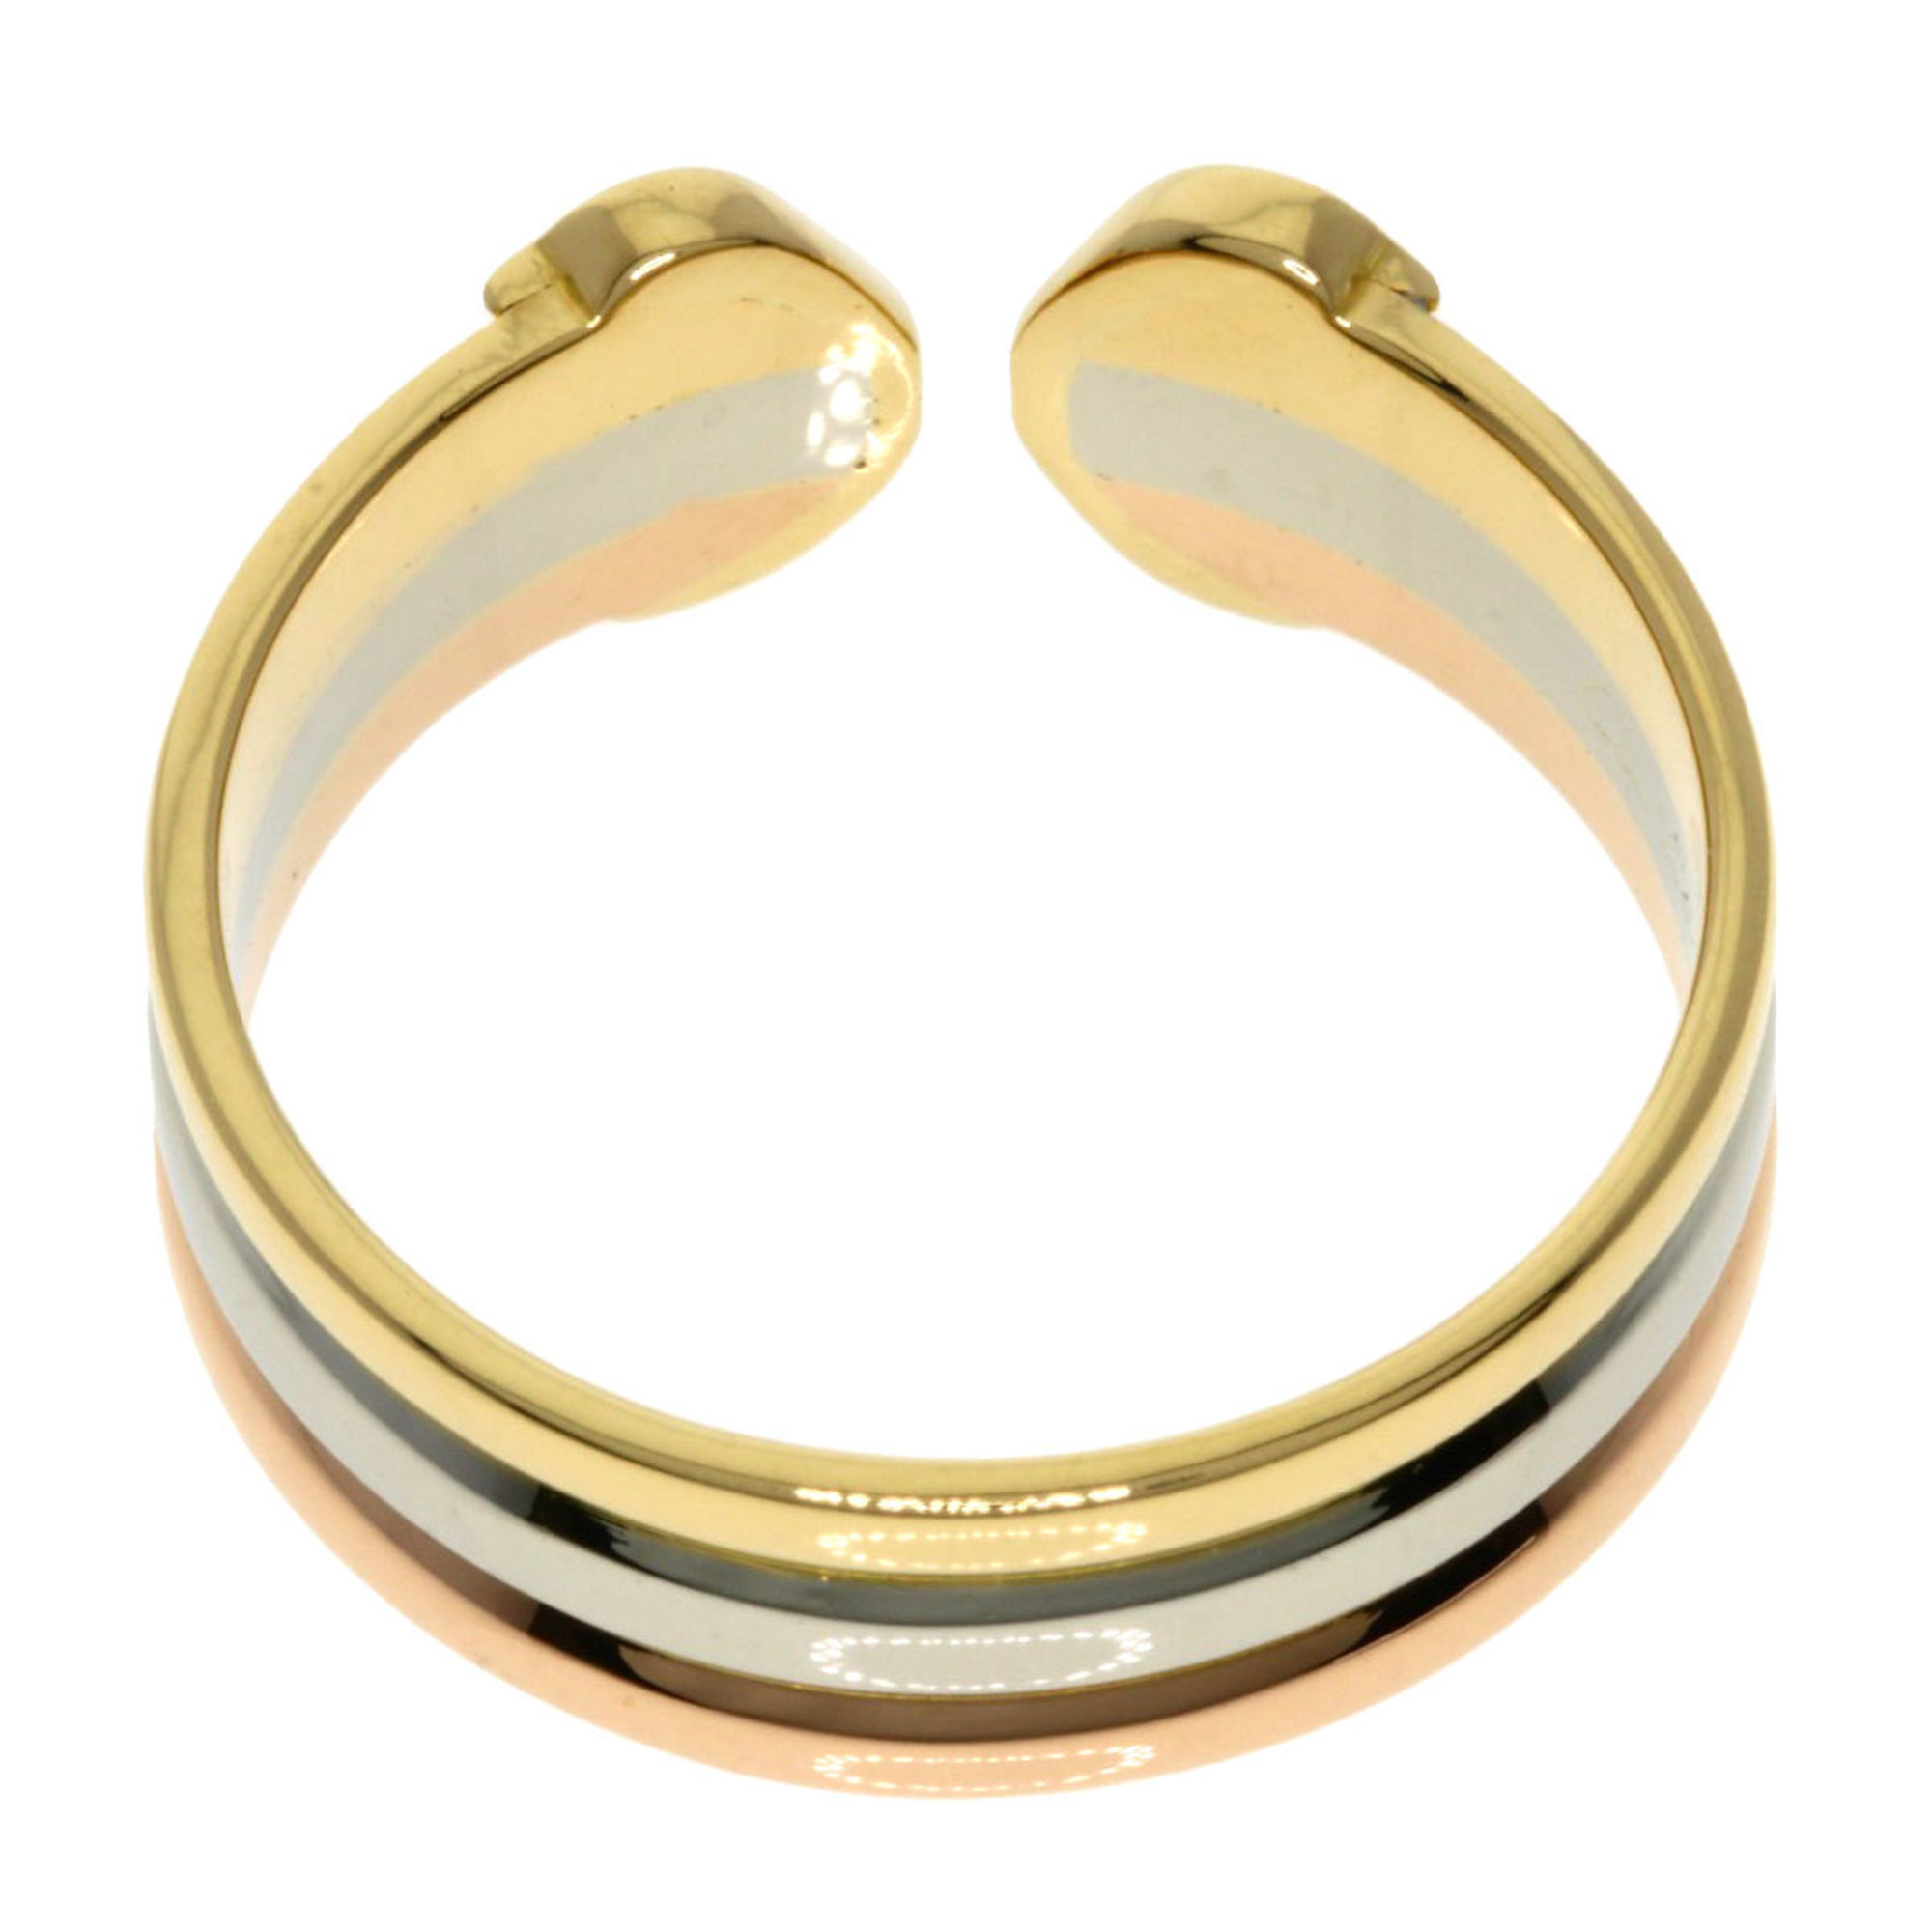 Cartier 2C Ring #50 K18 Yellow Gold/K18WG/K18PG Women's CARTIER